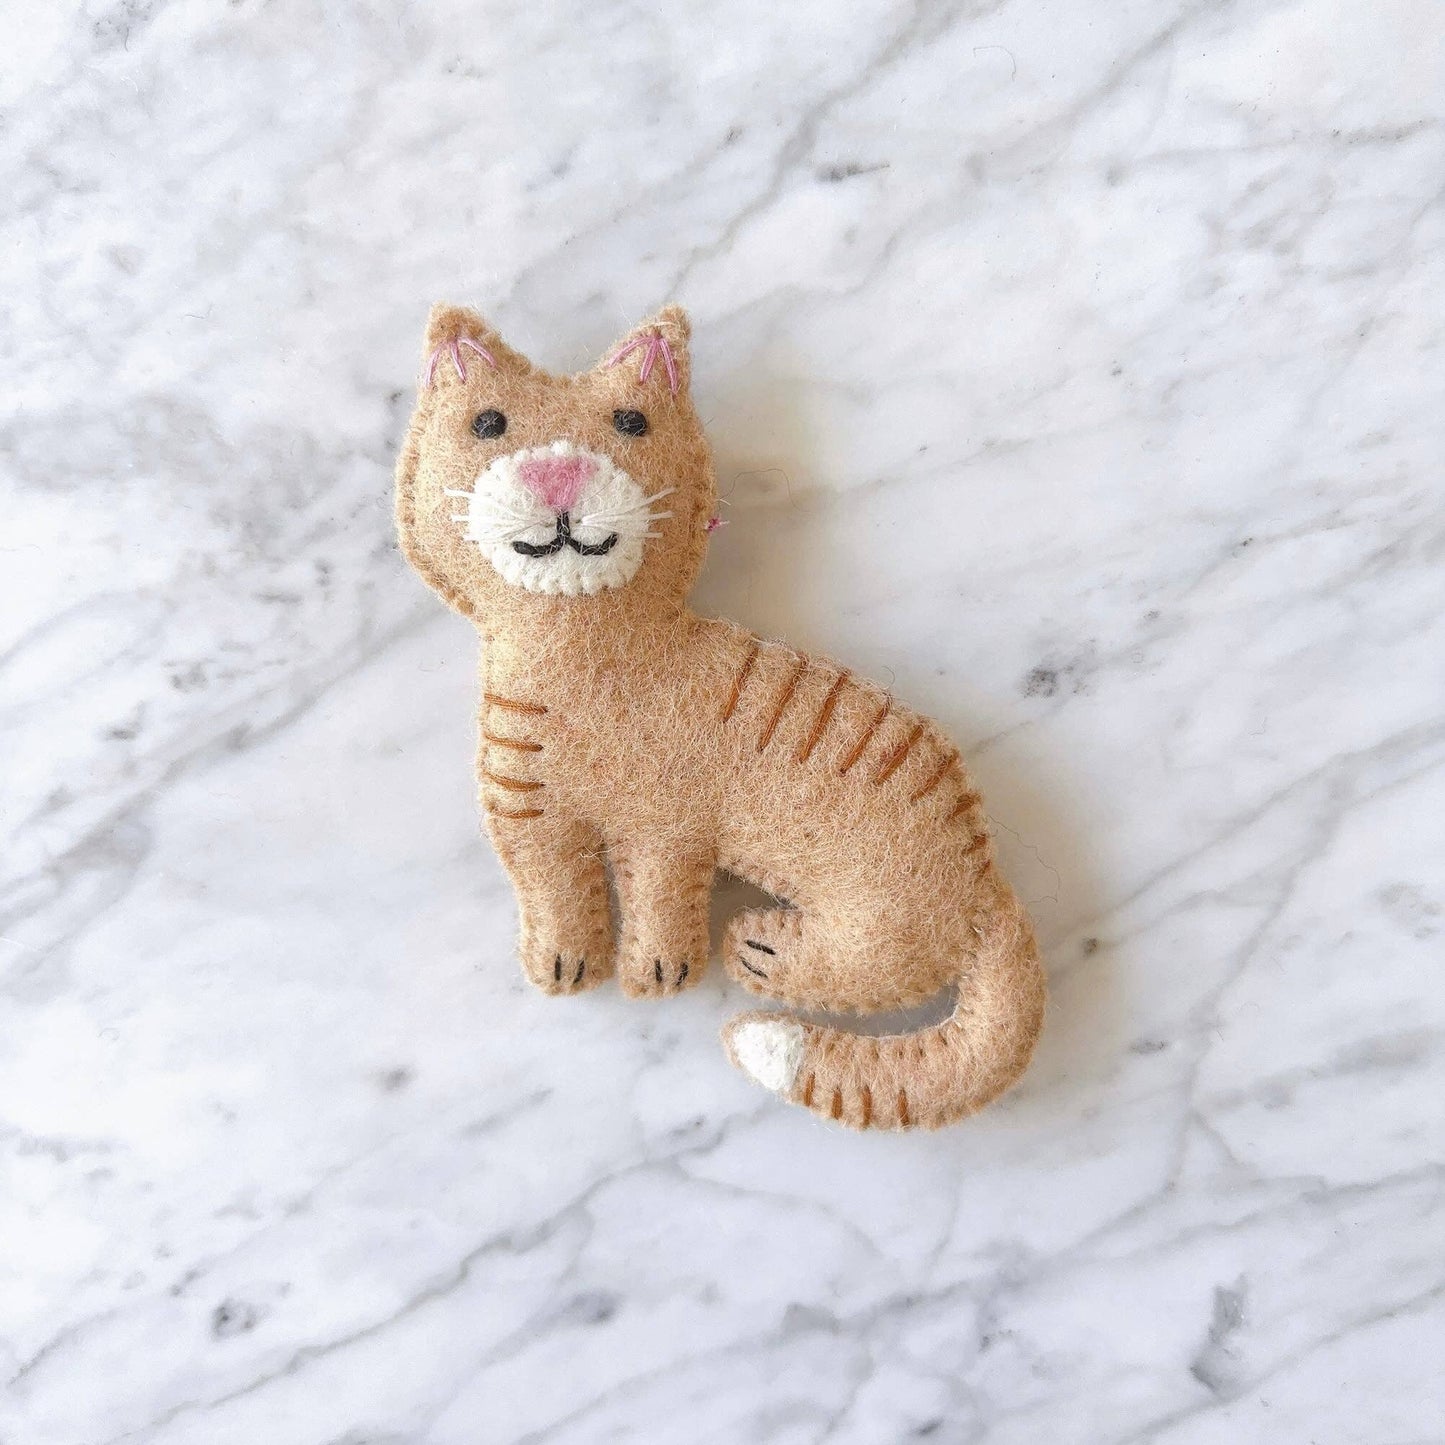 Felt Ornament - Stitched Cat: Brown Tabby